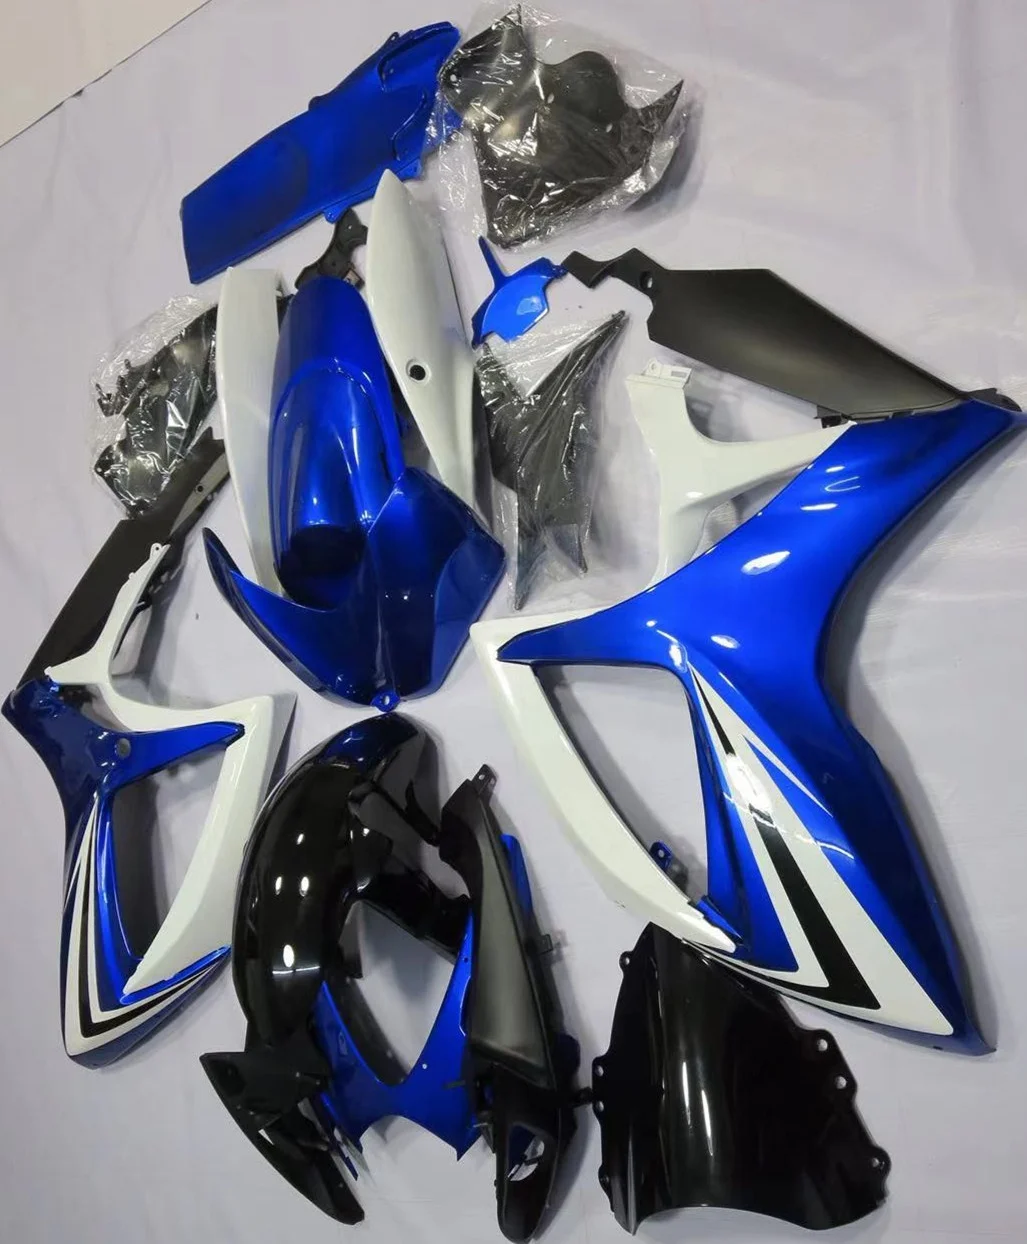 

2022 WHSC Motorcycle Accessories For SUZUKI GSXR600-750 2006-2007 ABS Plastic Bodywork Blue Black White, Pictures shown